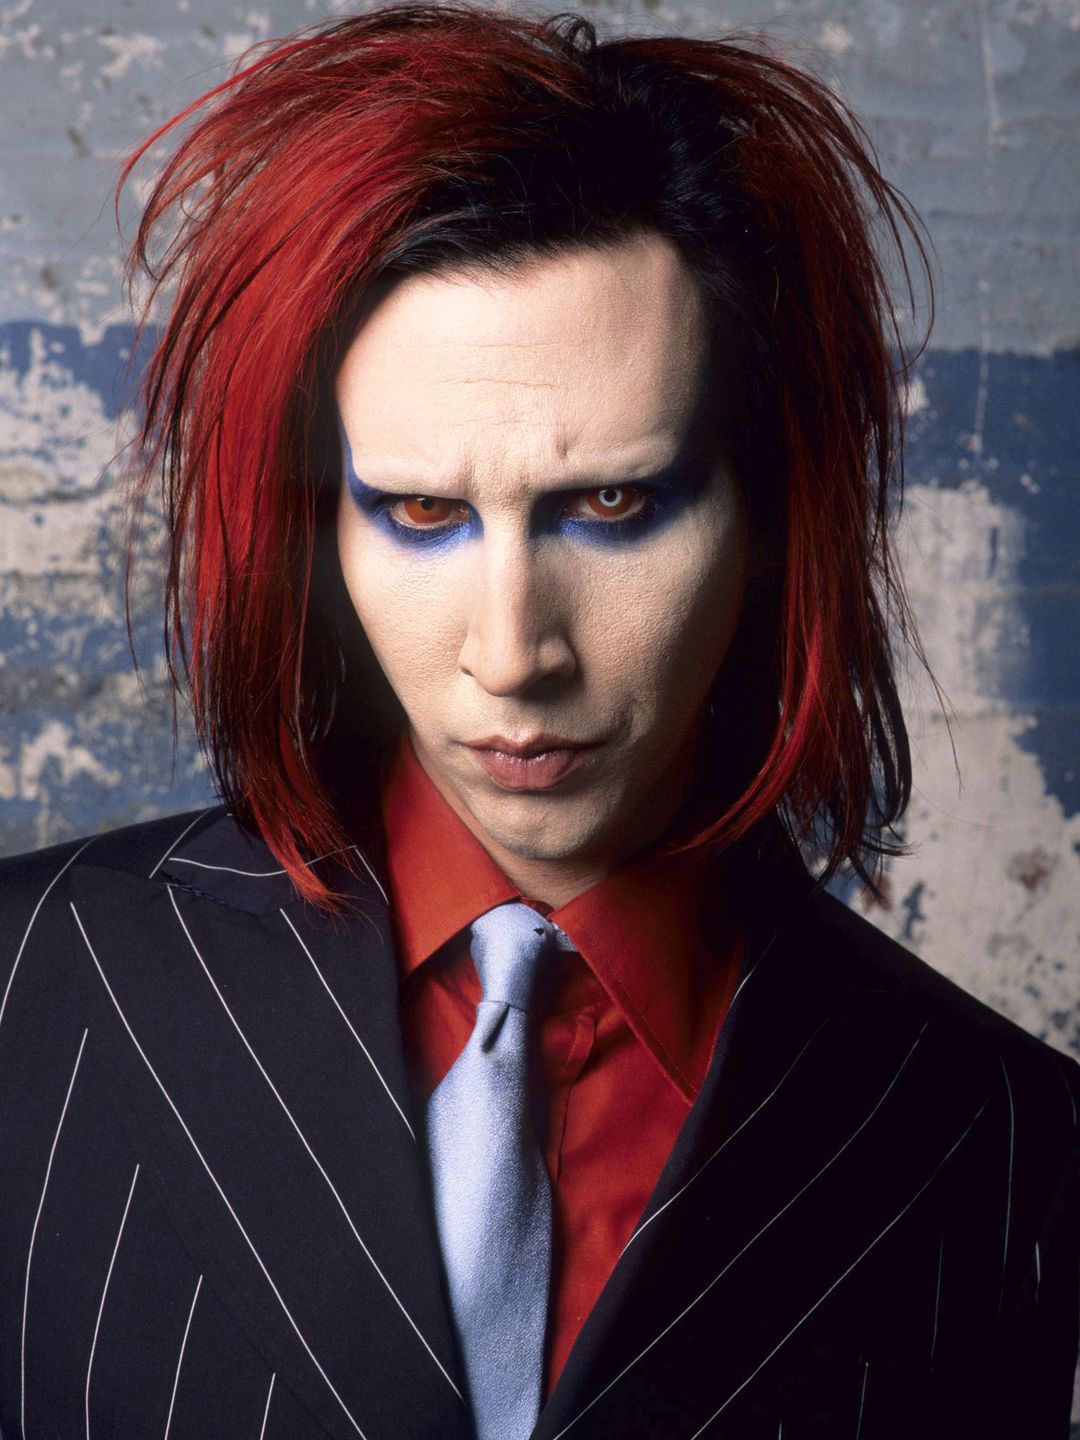 Marilyn Manson ethnicity